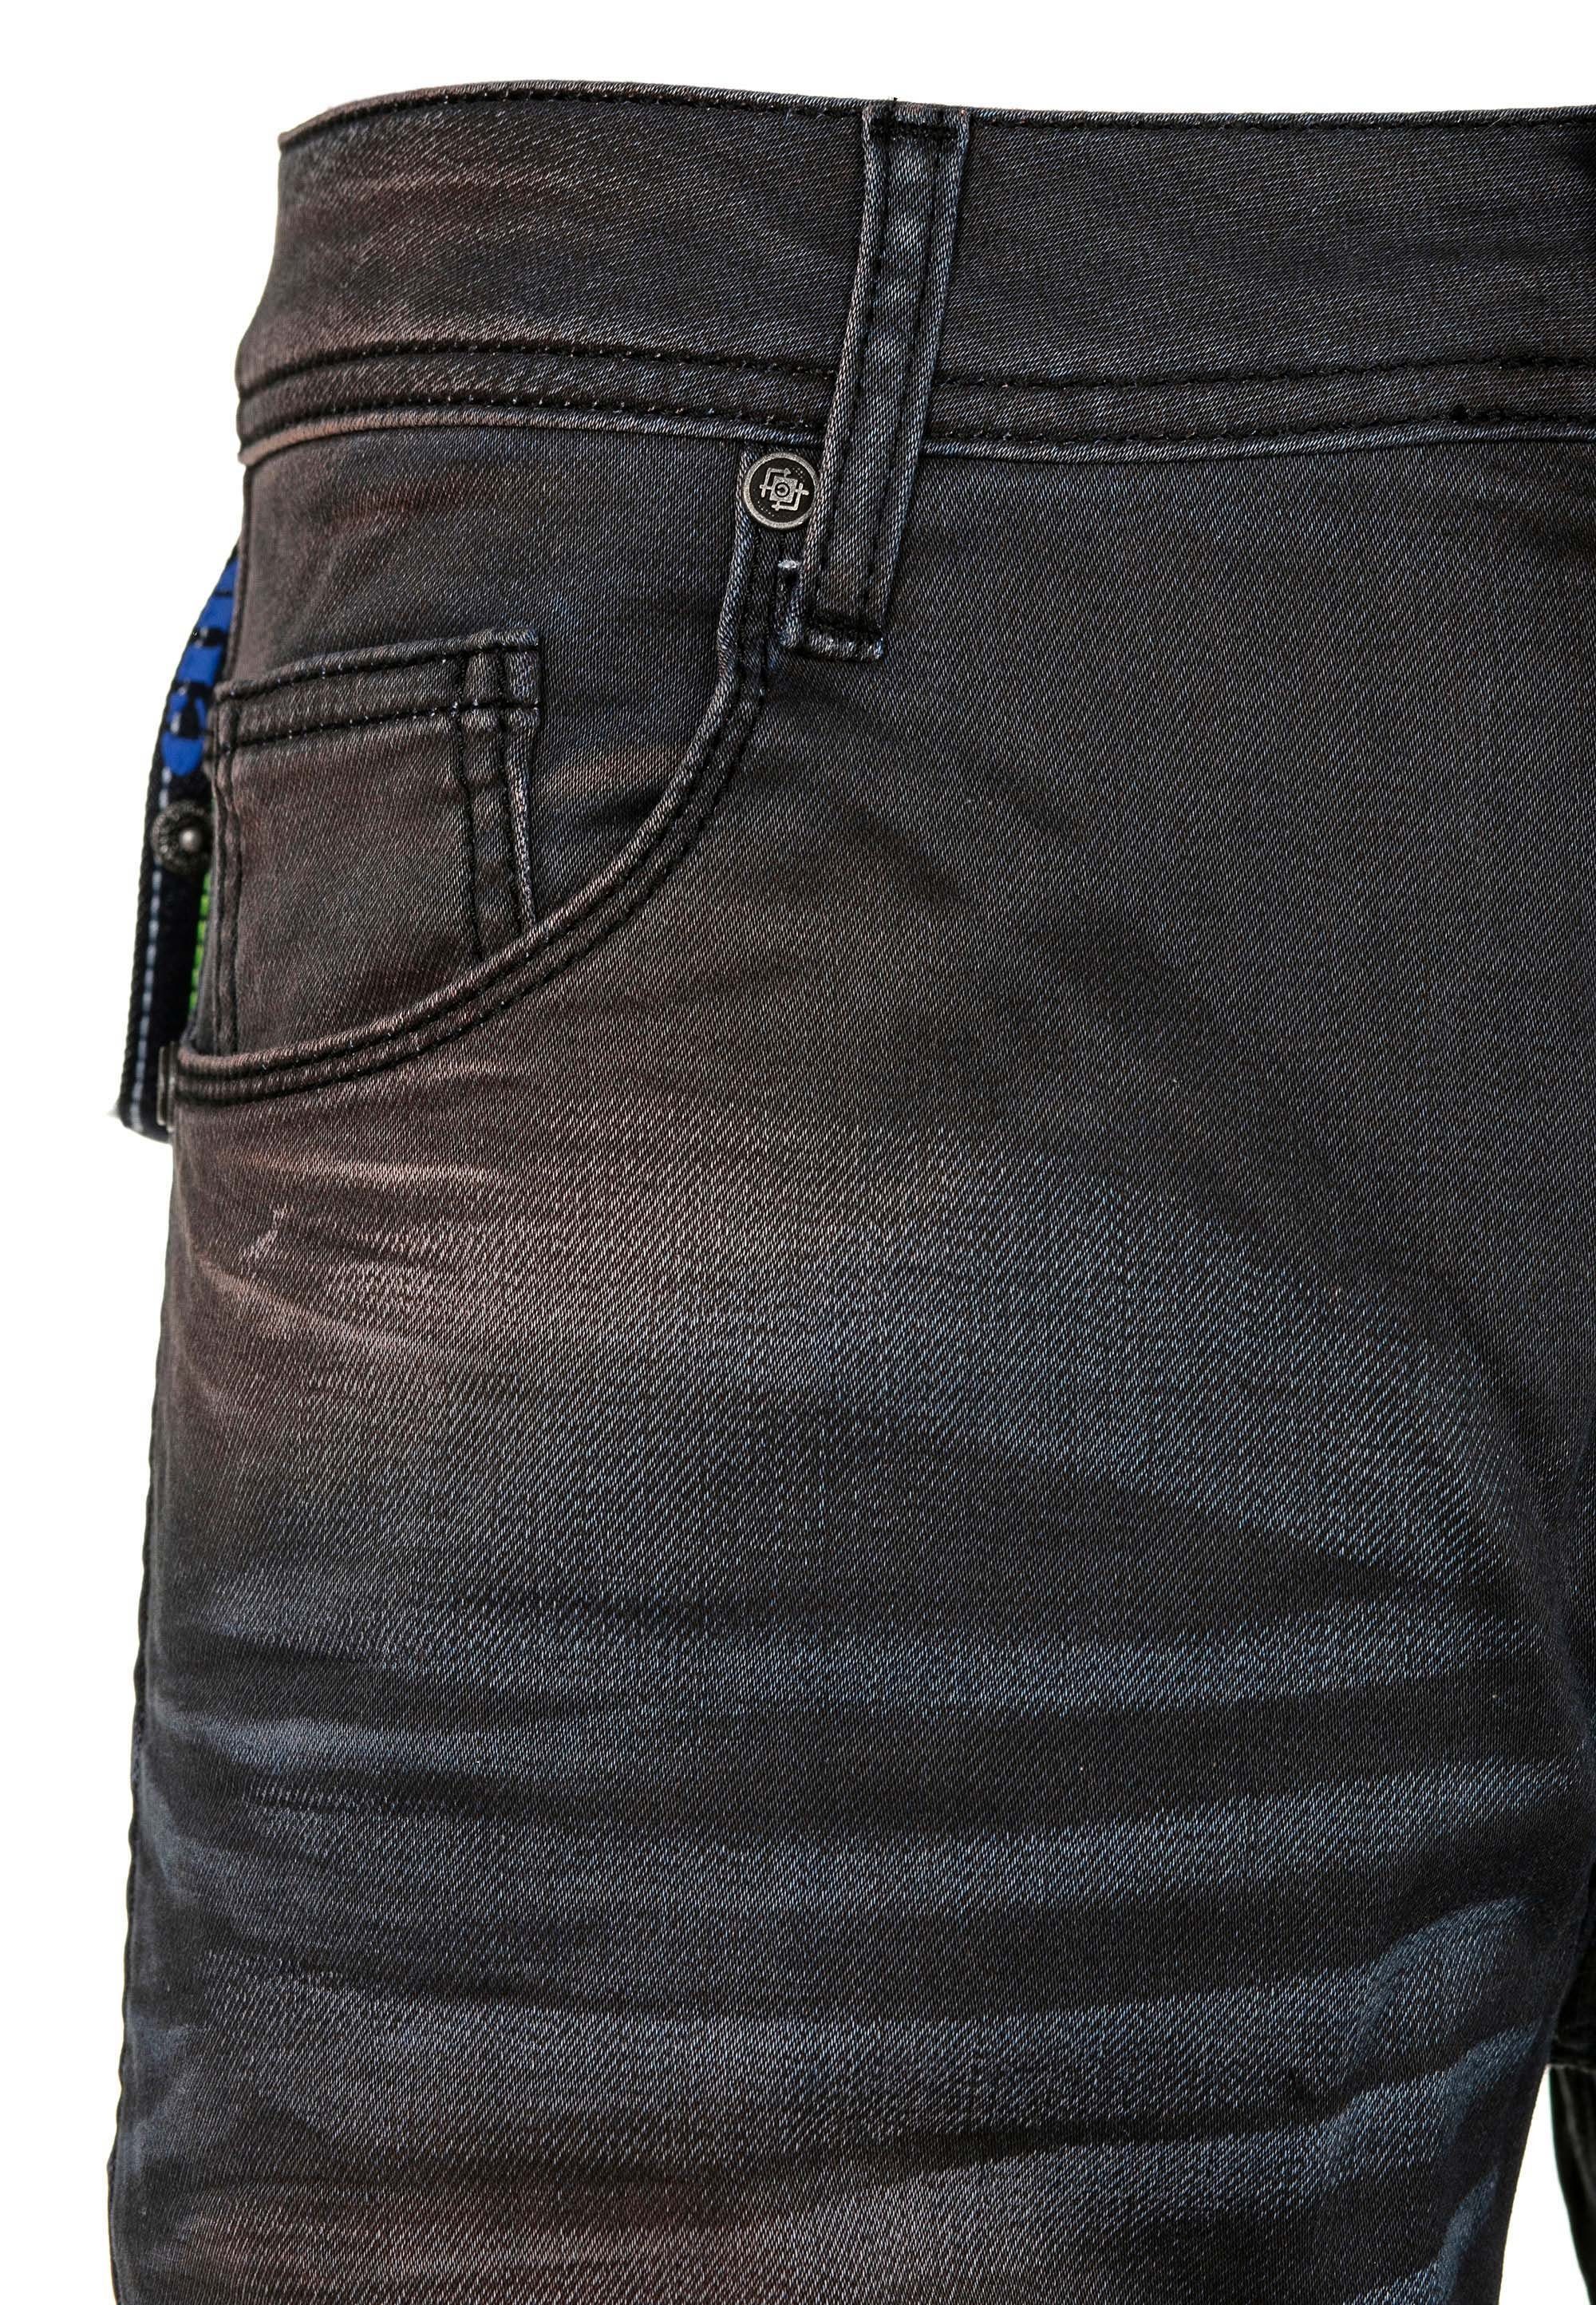 Cipo 5-Pocket & Straight Slim-fit-Jeans in braun Baxx Style im Fit